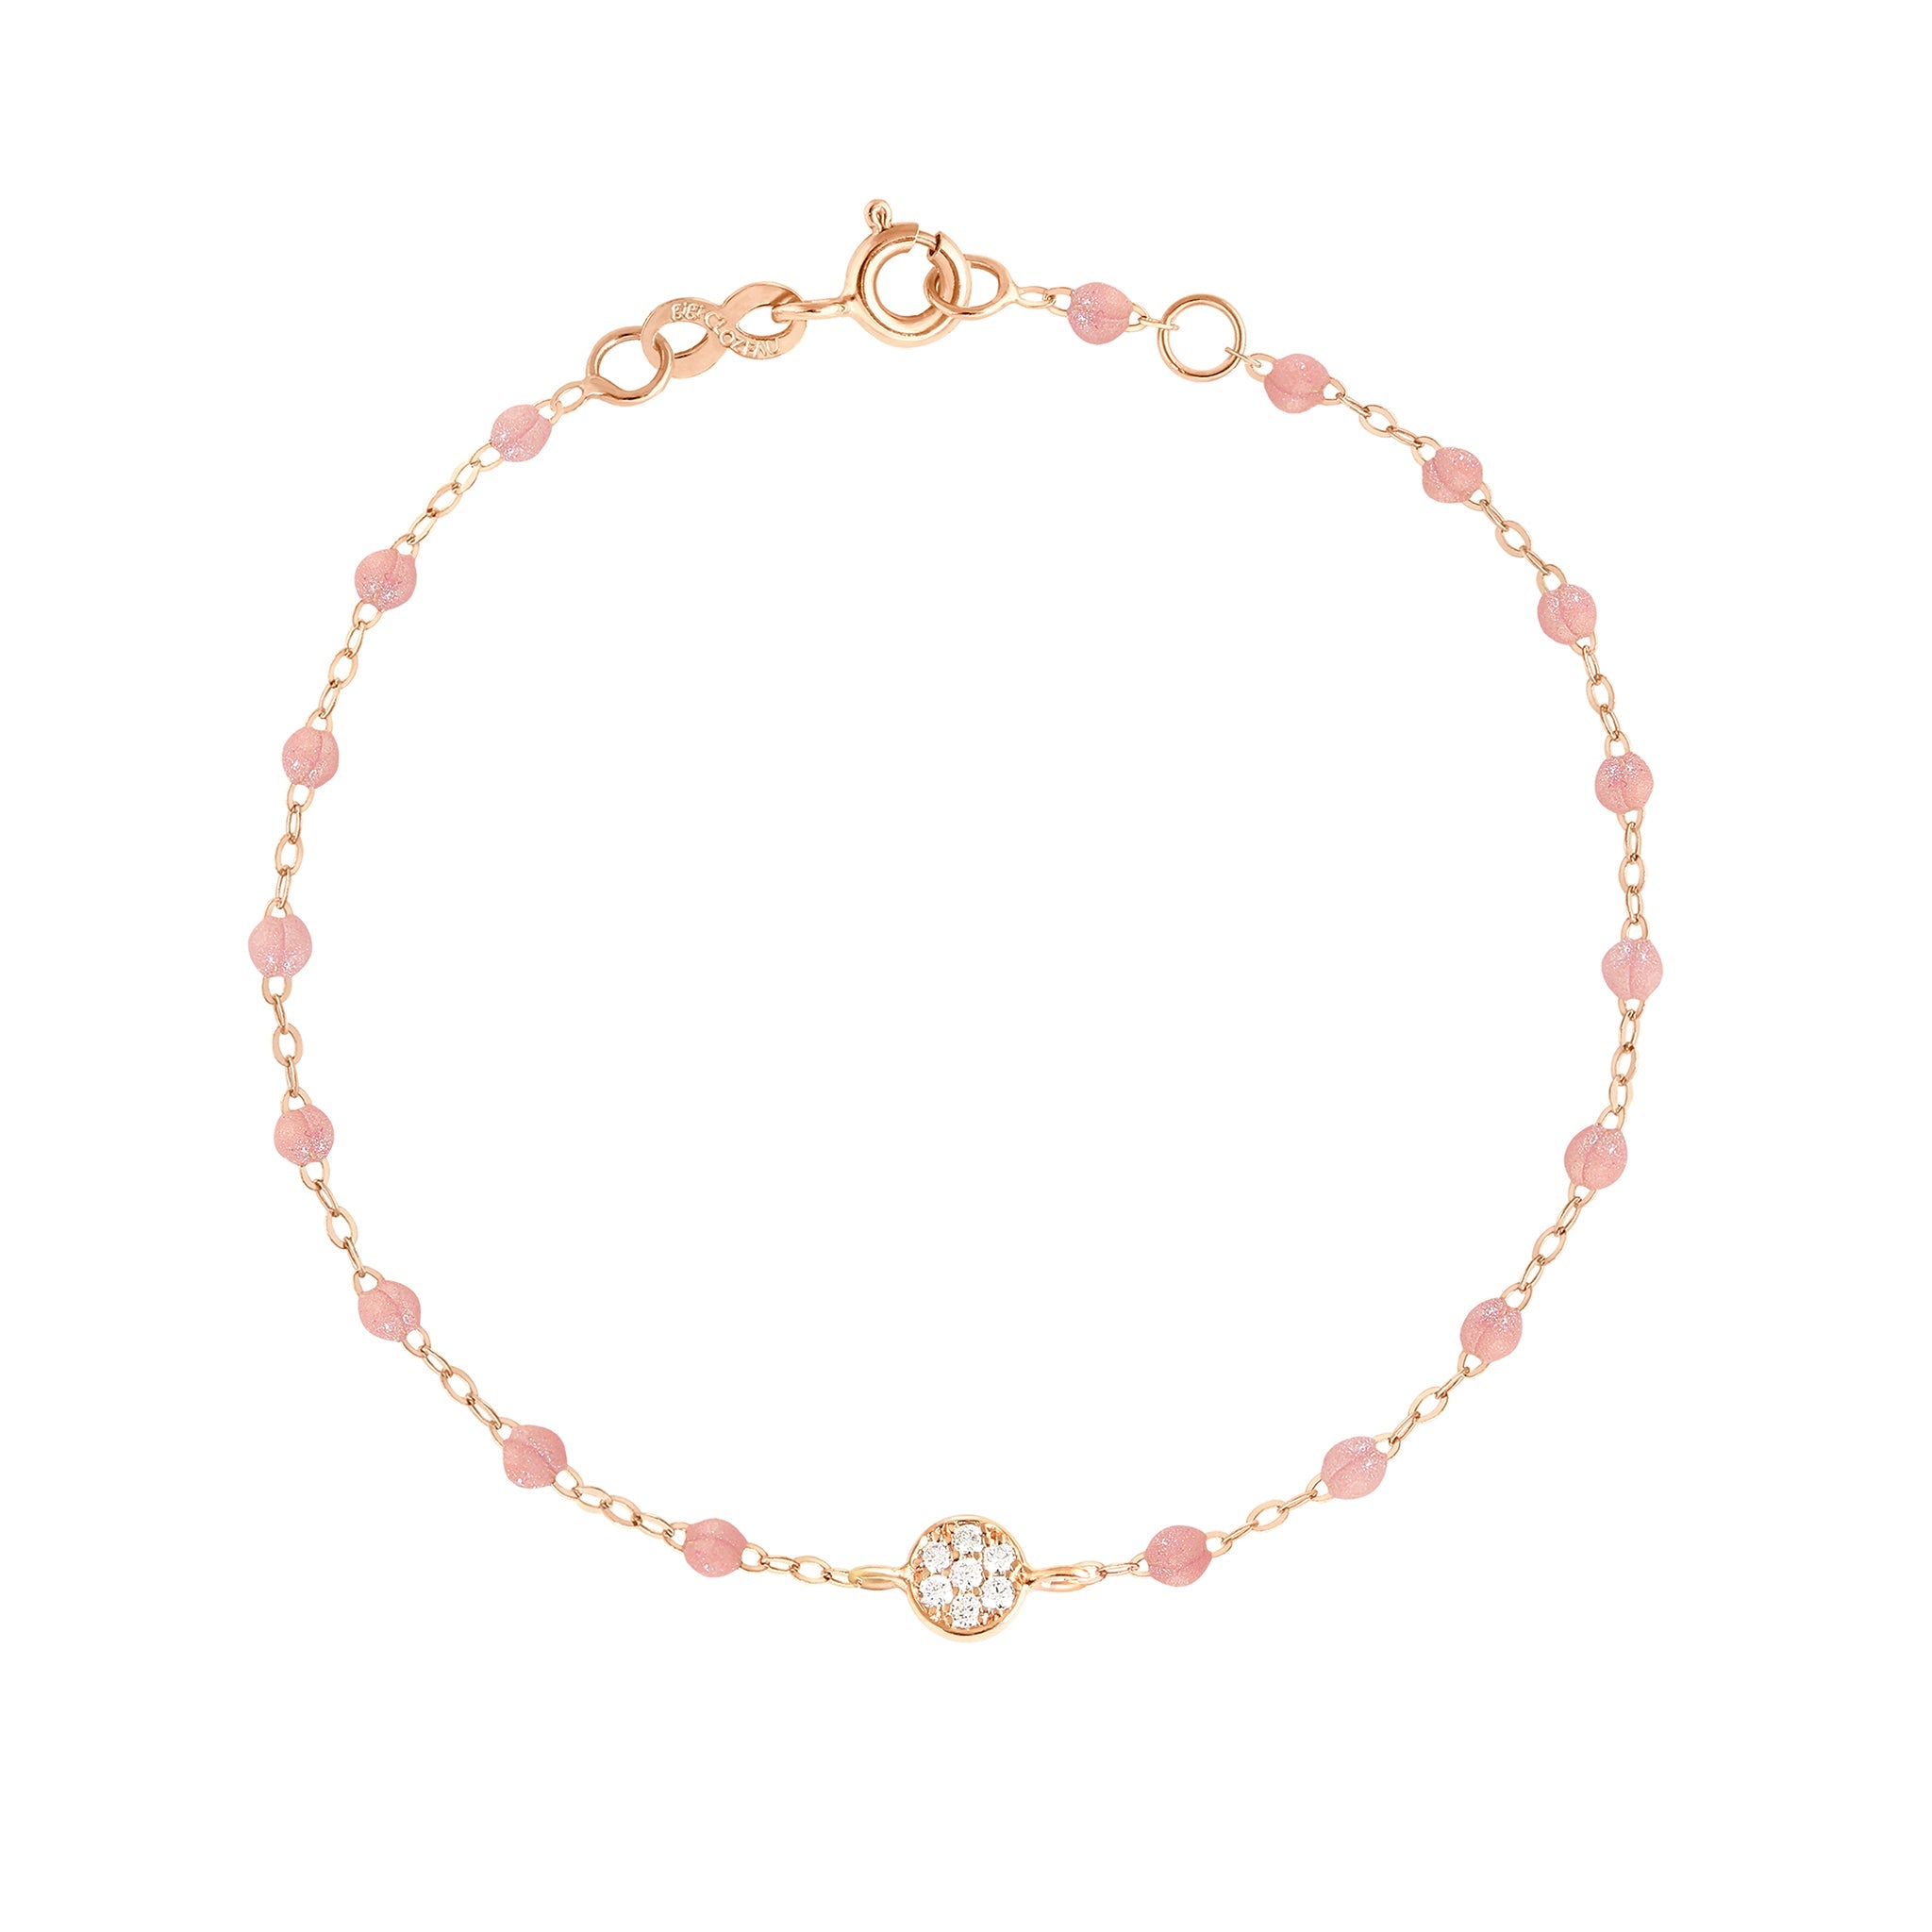 Bracelet blush Puce diamants, or rose, 17 cm pirate Référence :  b3pu002r6317di -1